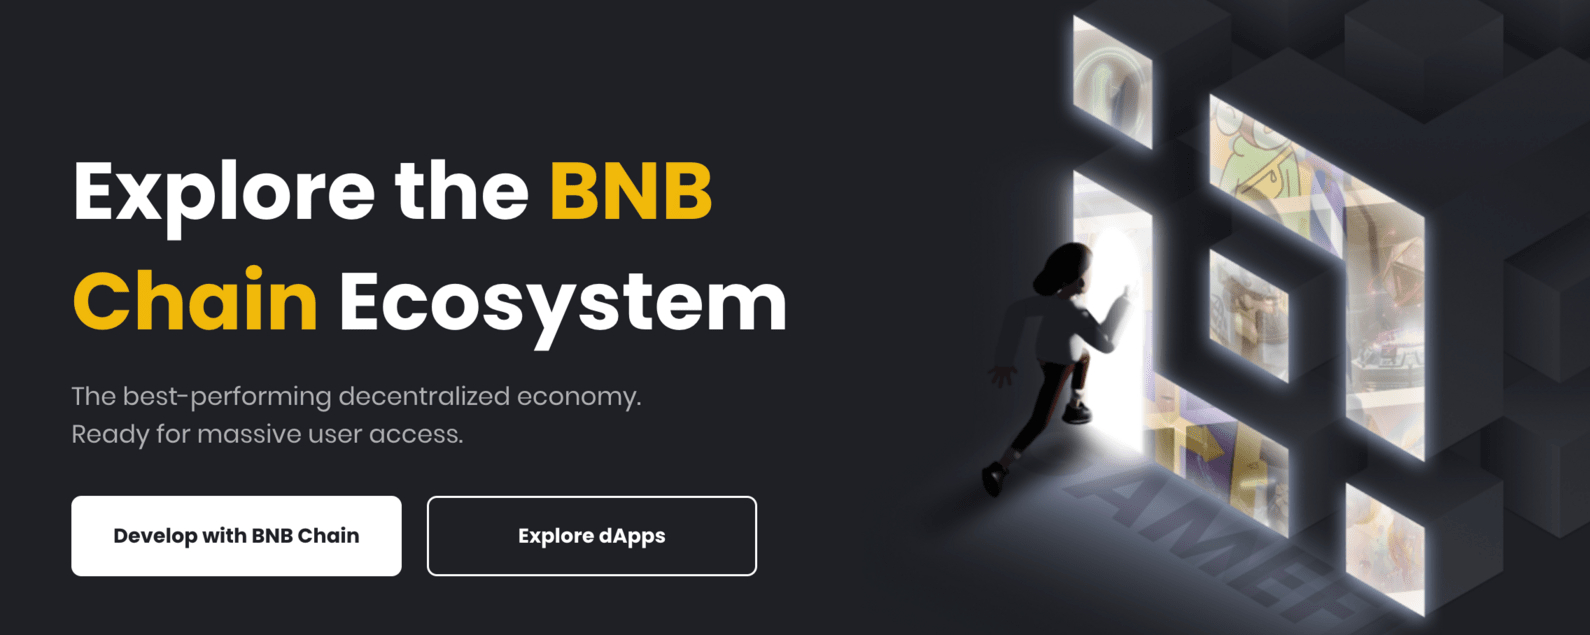 BNB Chain Ecosystem